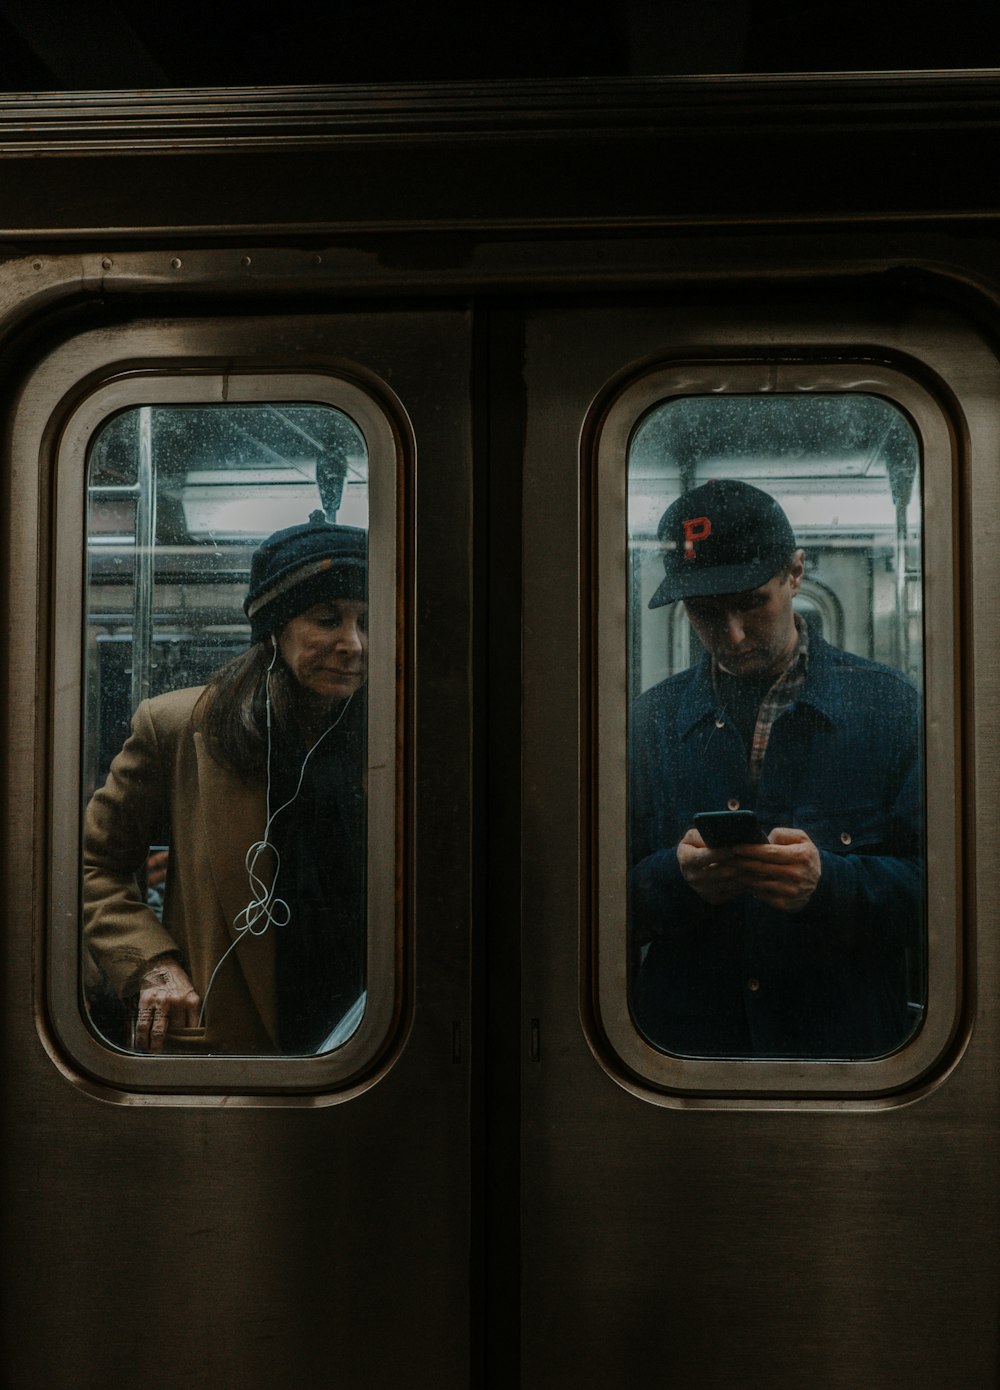 man in brown jacket standing in train